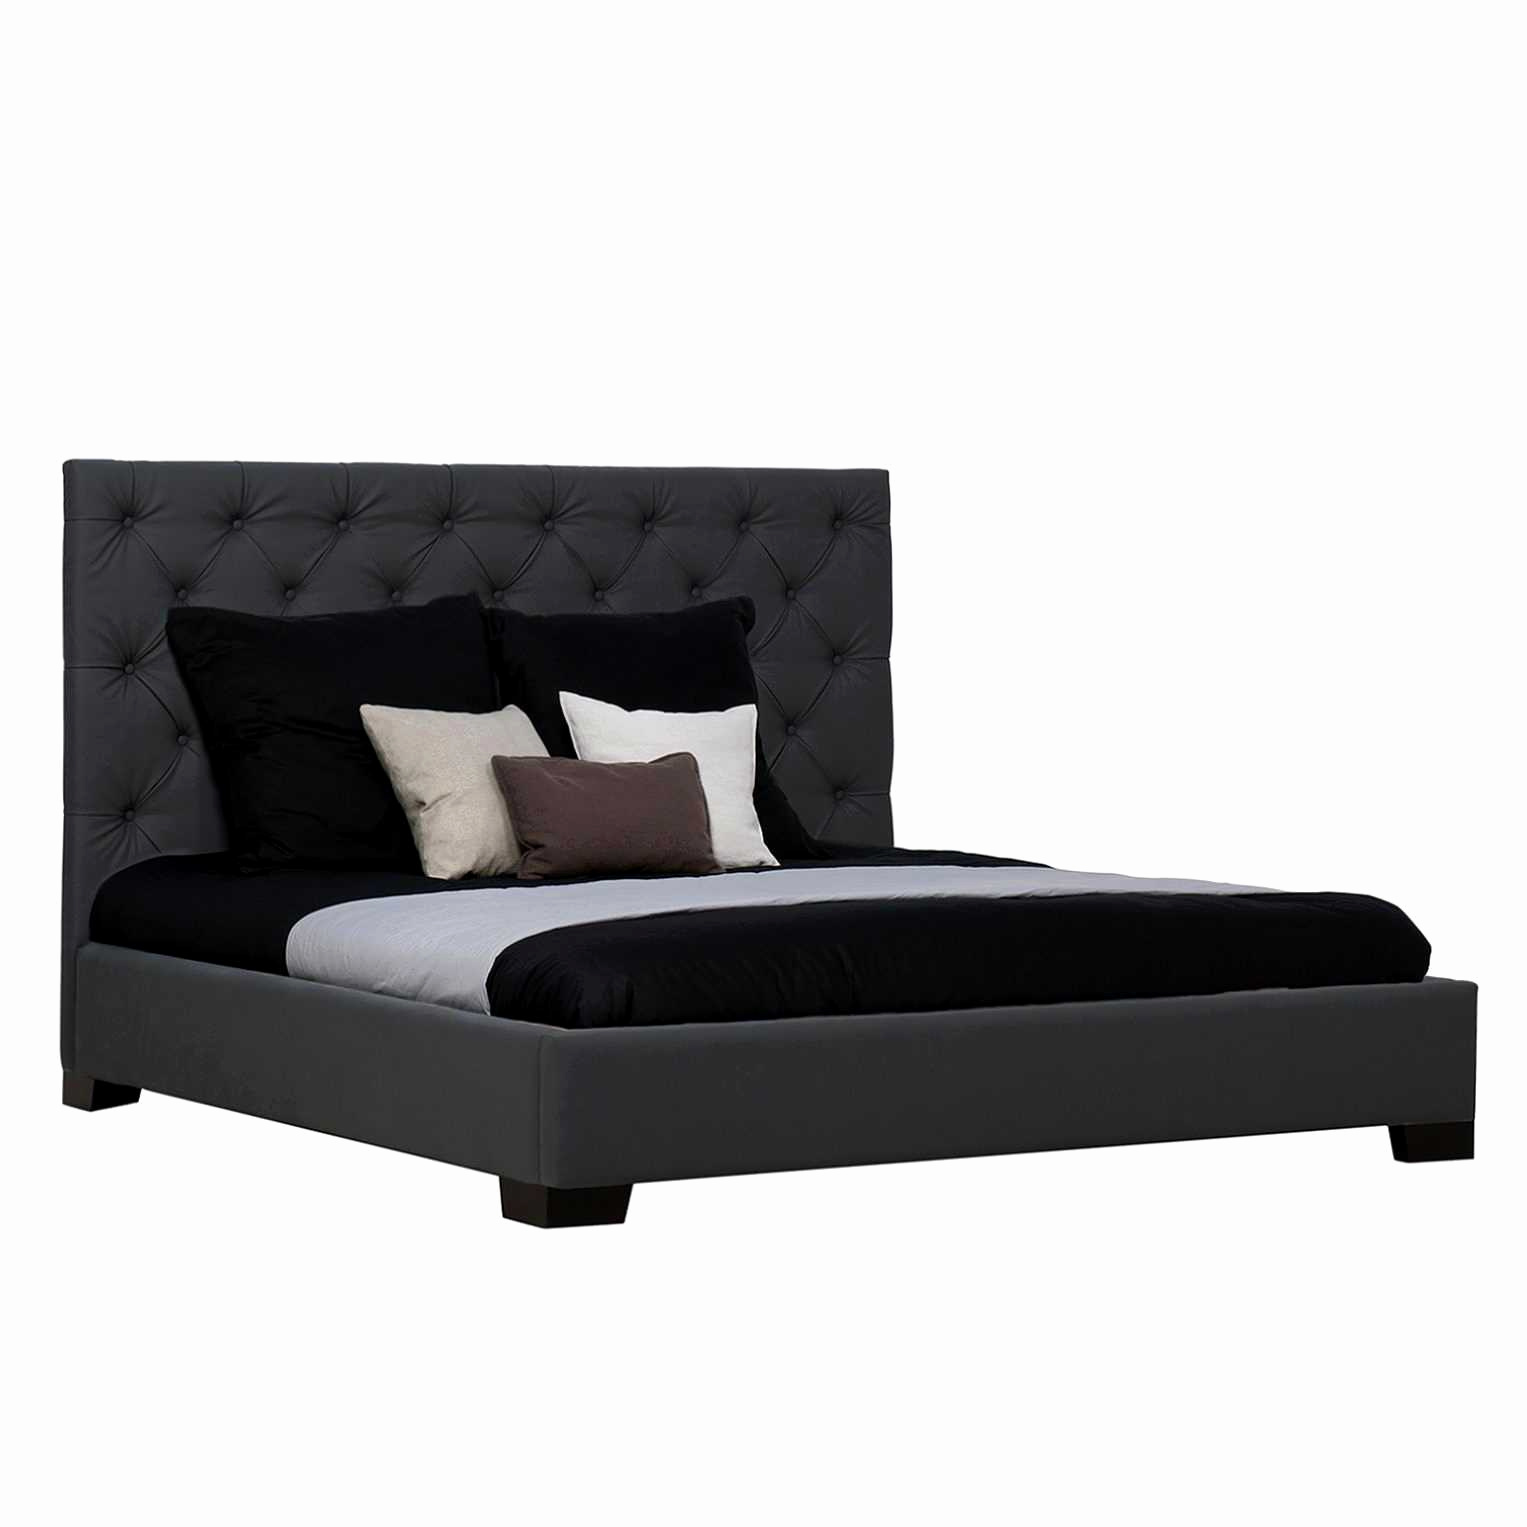 mini canape pour chambre luxe divin canape lit conforama sur mini canape pour chambre unique lit of mini canape pour chambre